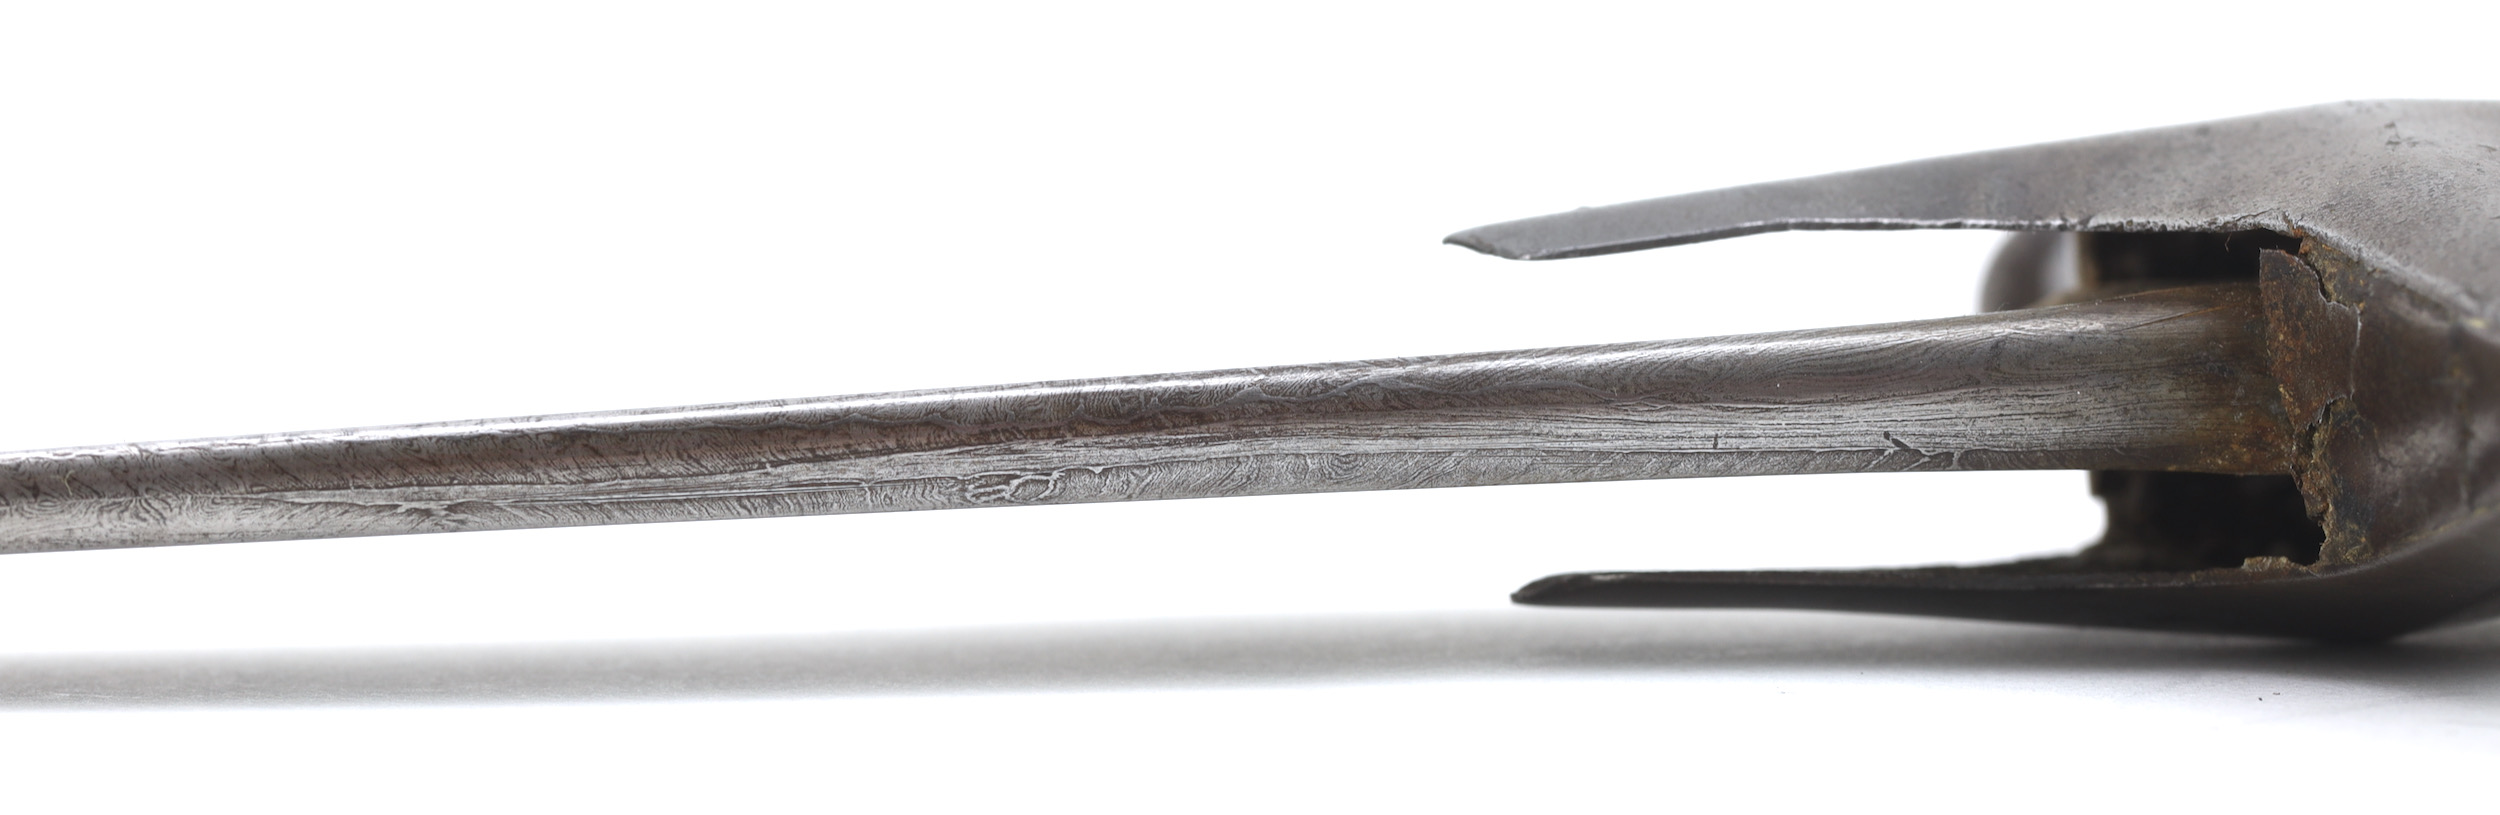 Ottoman twist-core sword spine